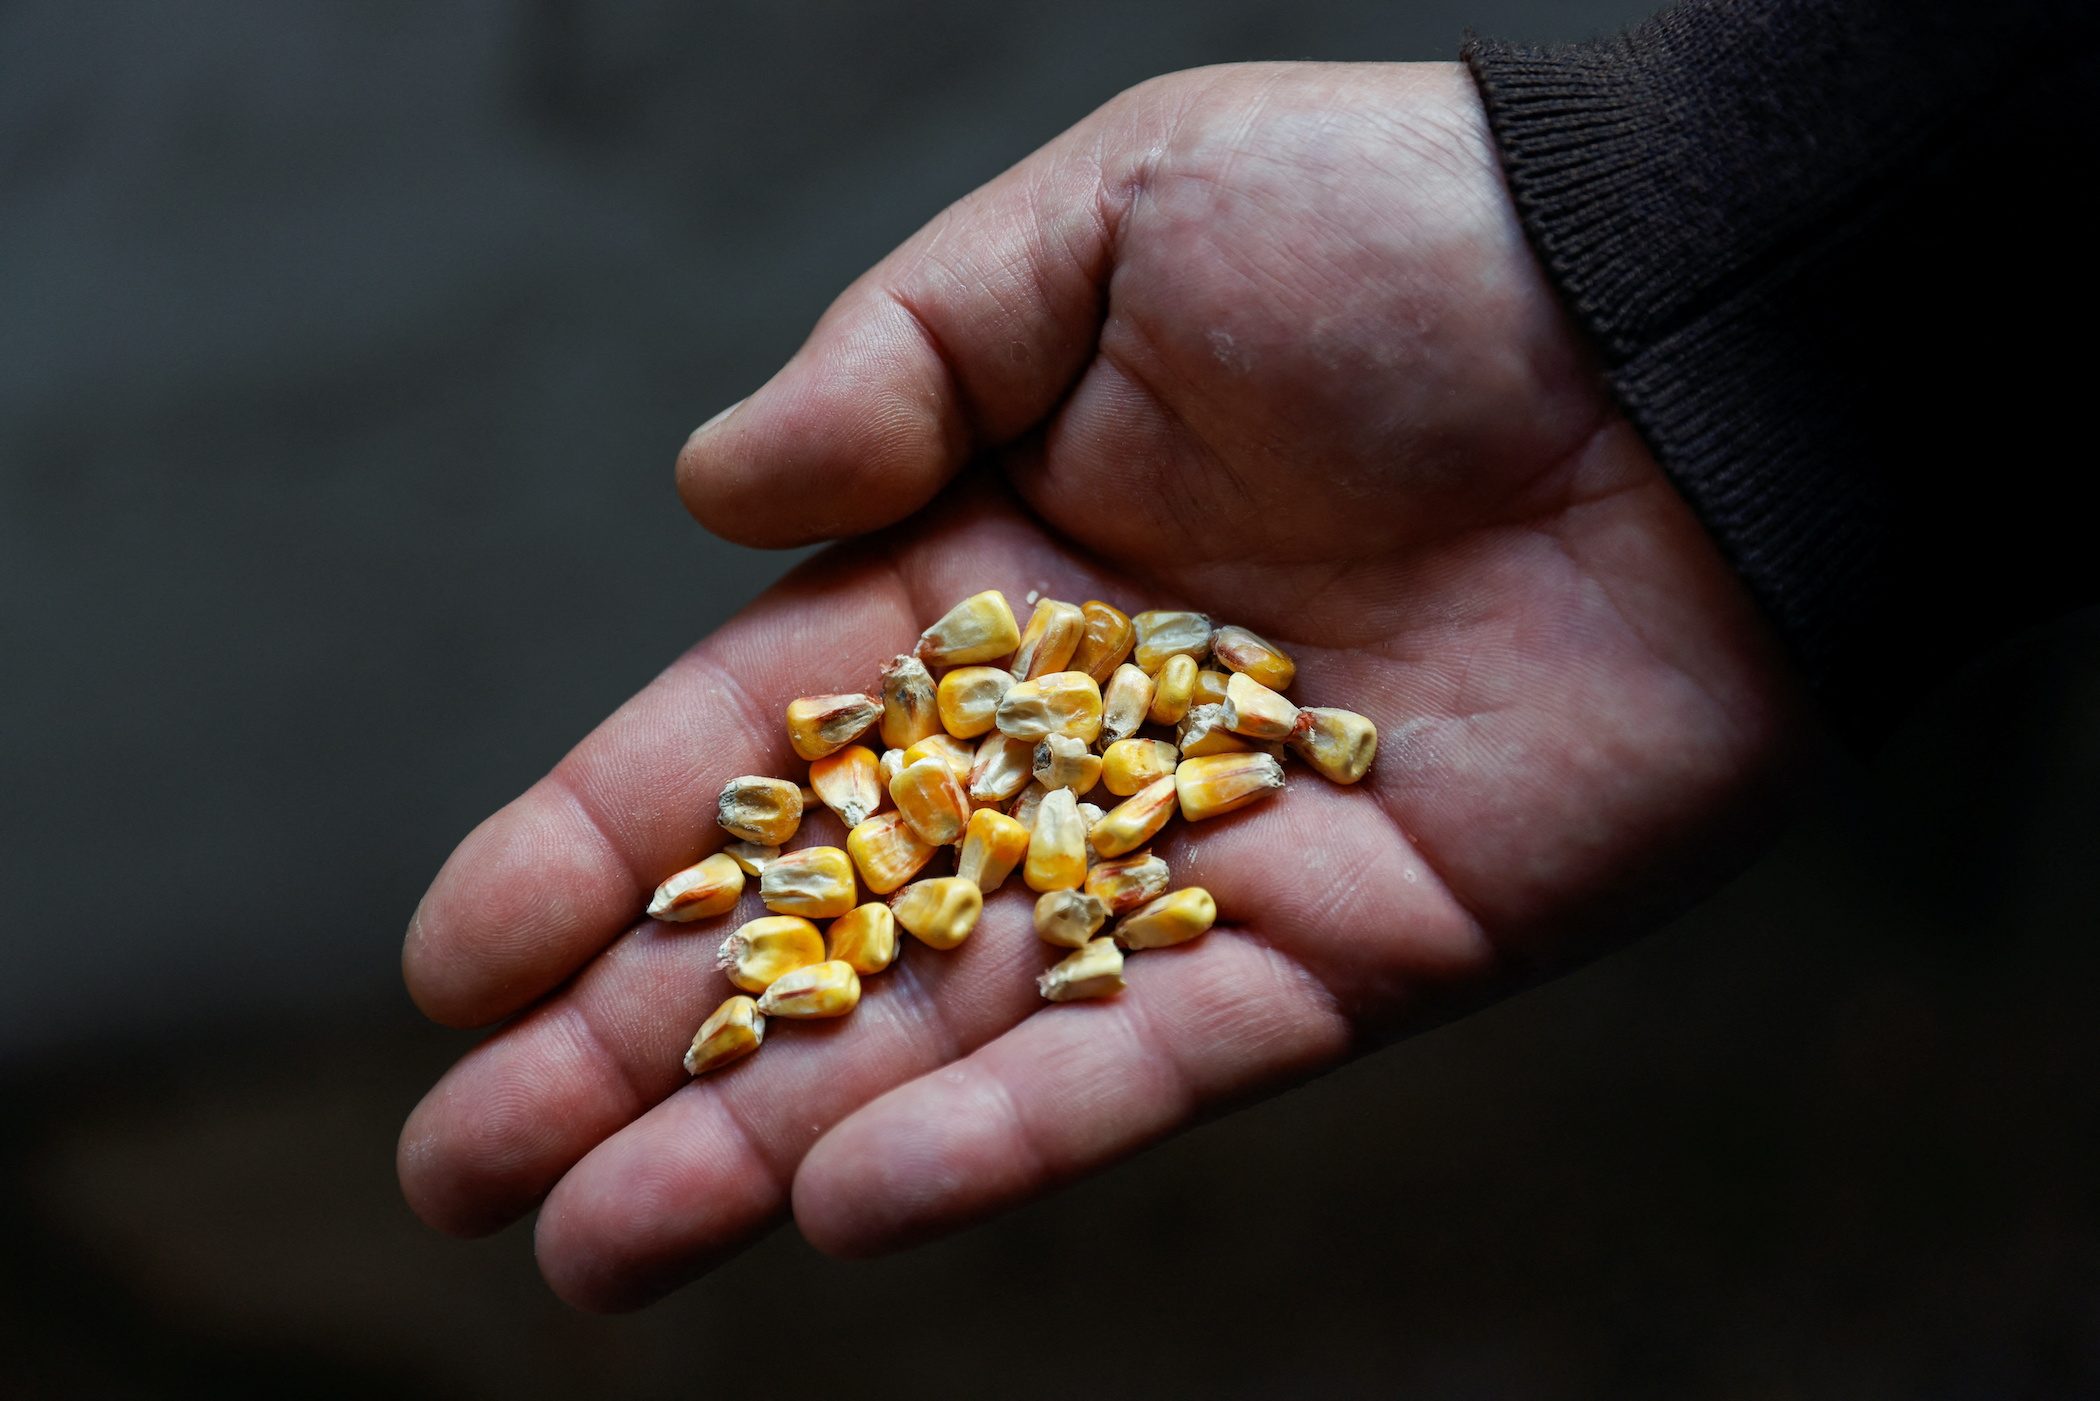 Ukraine’s grain crop at risk as silos still half full due to stalled exports